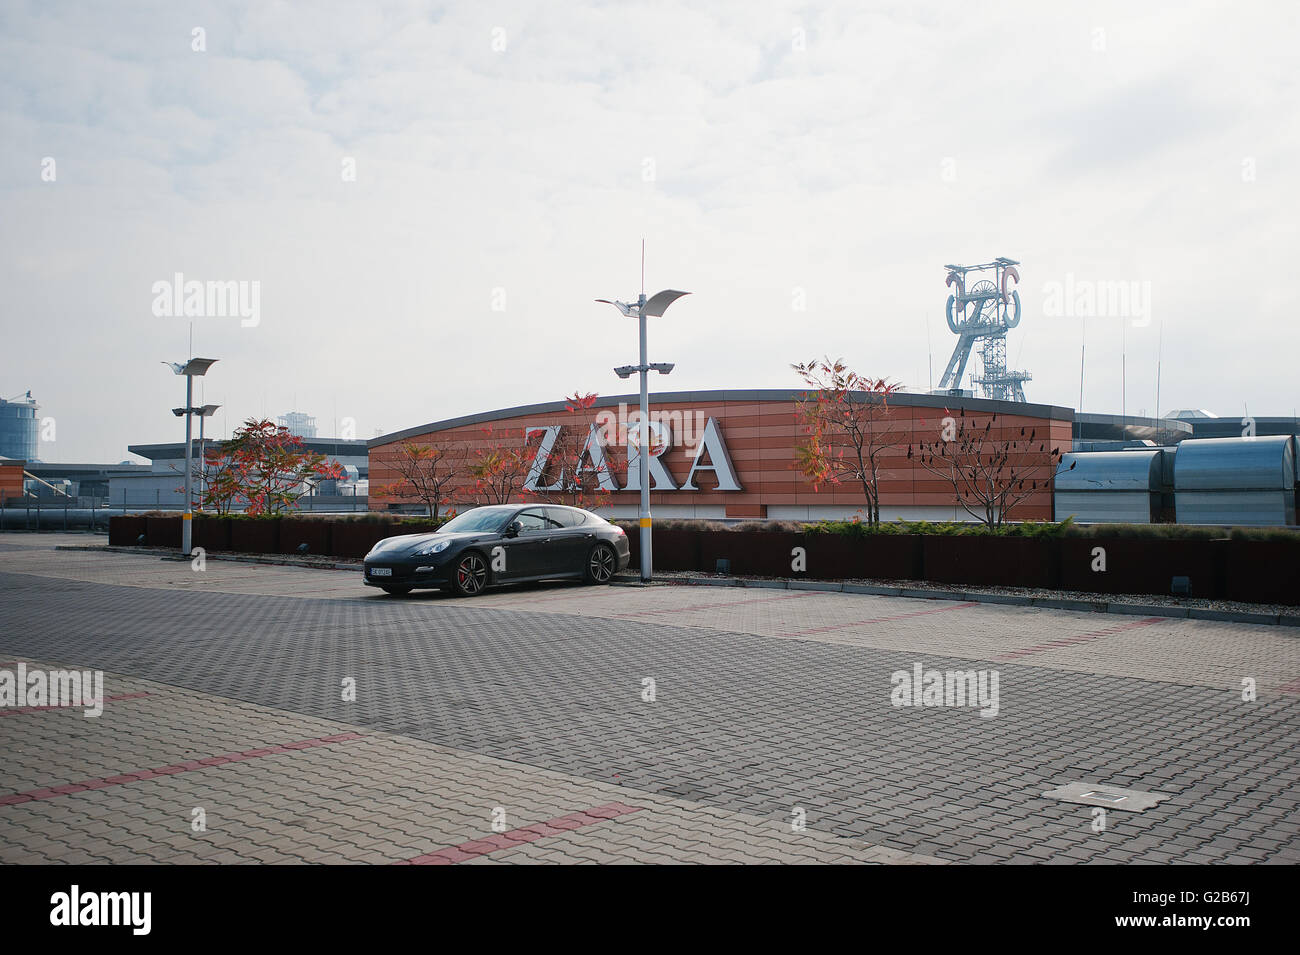 Katowice, Poland - October 24, 2014: Super car Porsche Panamera parked  background fashion boutique Zara Stock Photo - Alamy